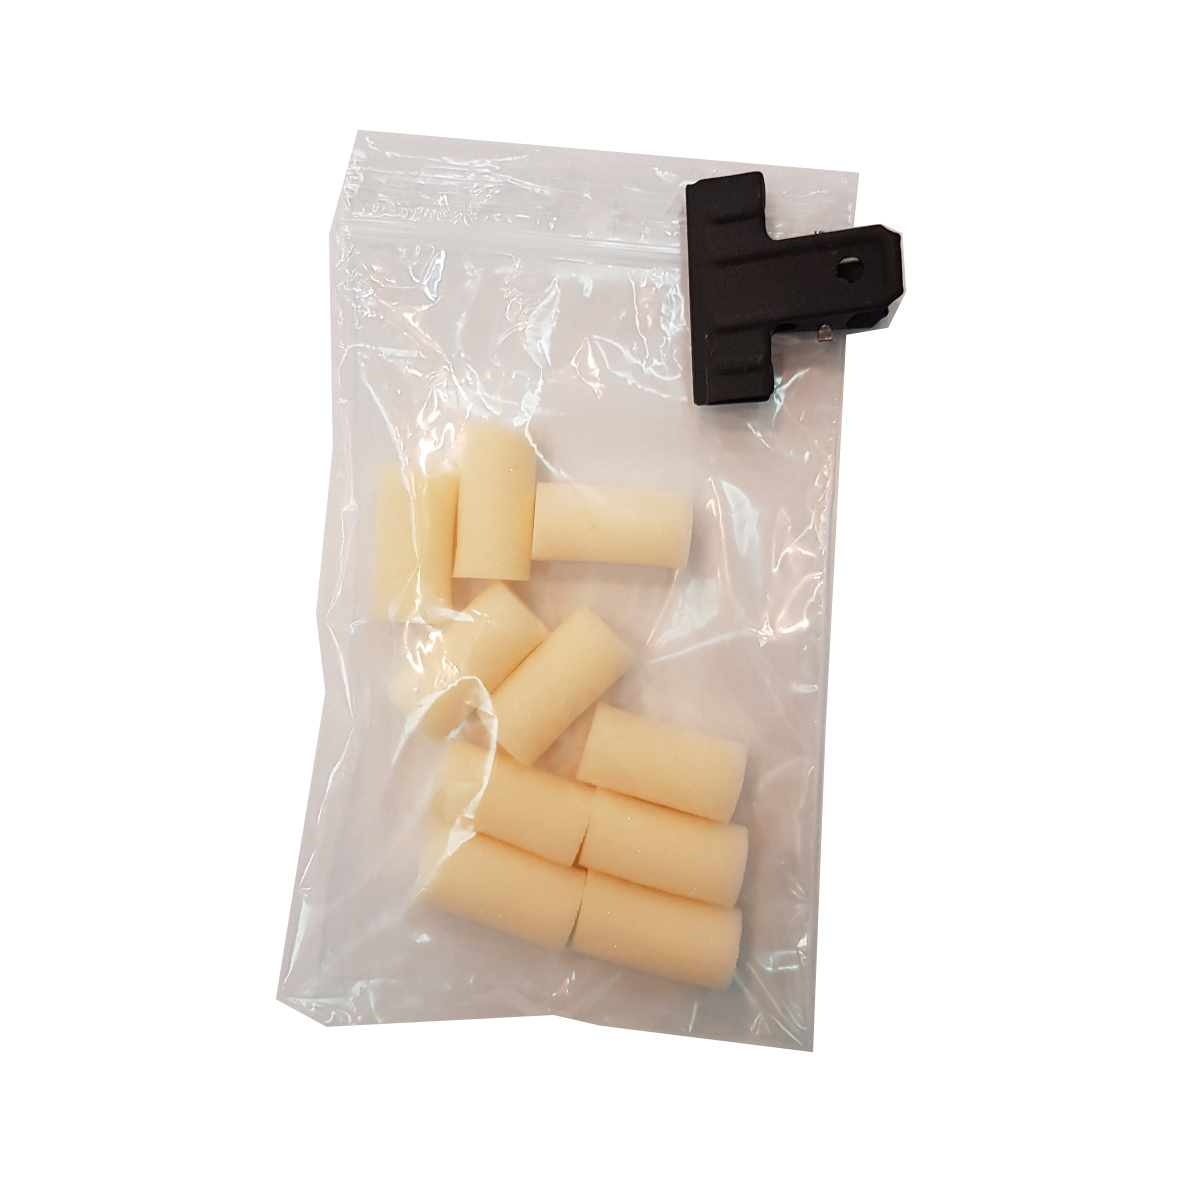 REvolution No. 3 - Cylindrical glue sponges